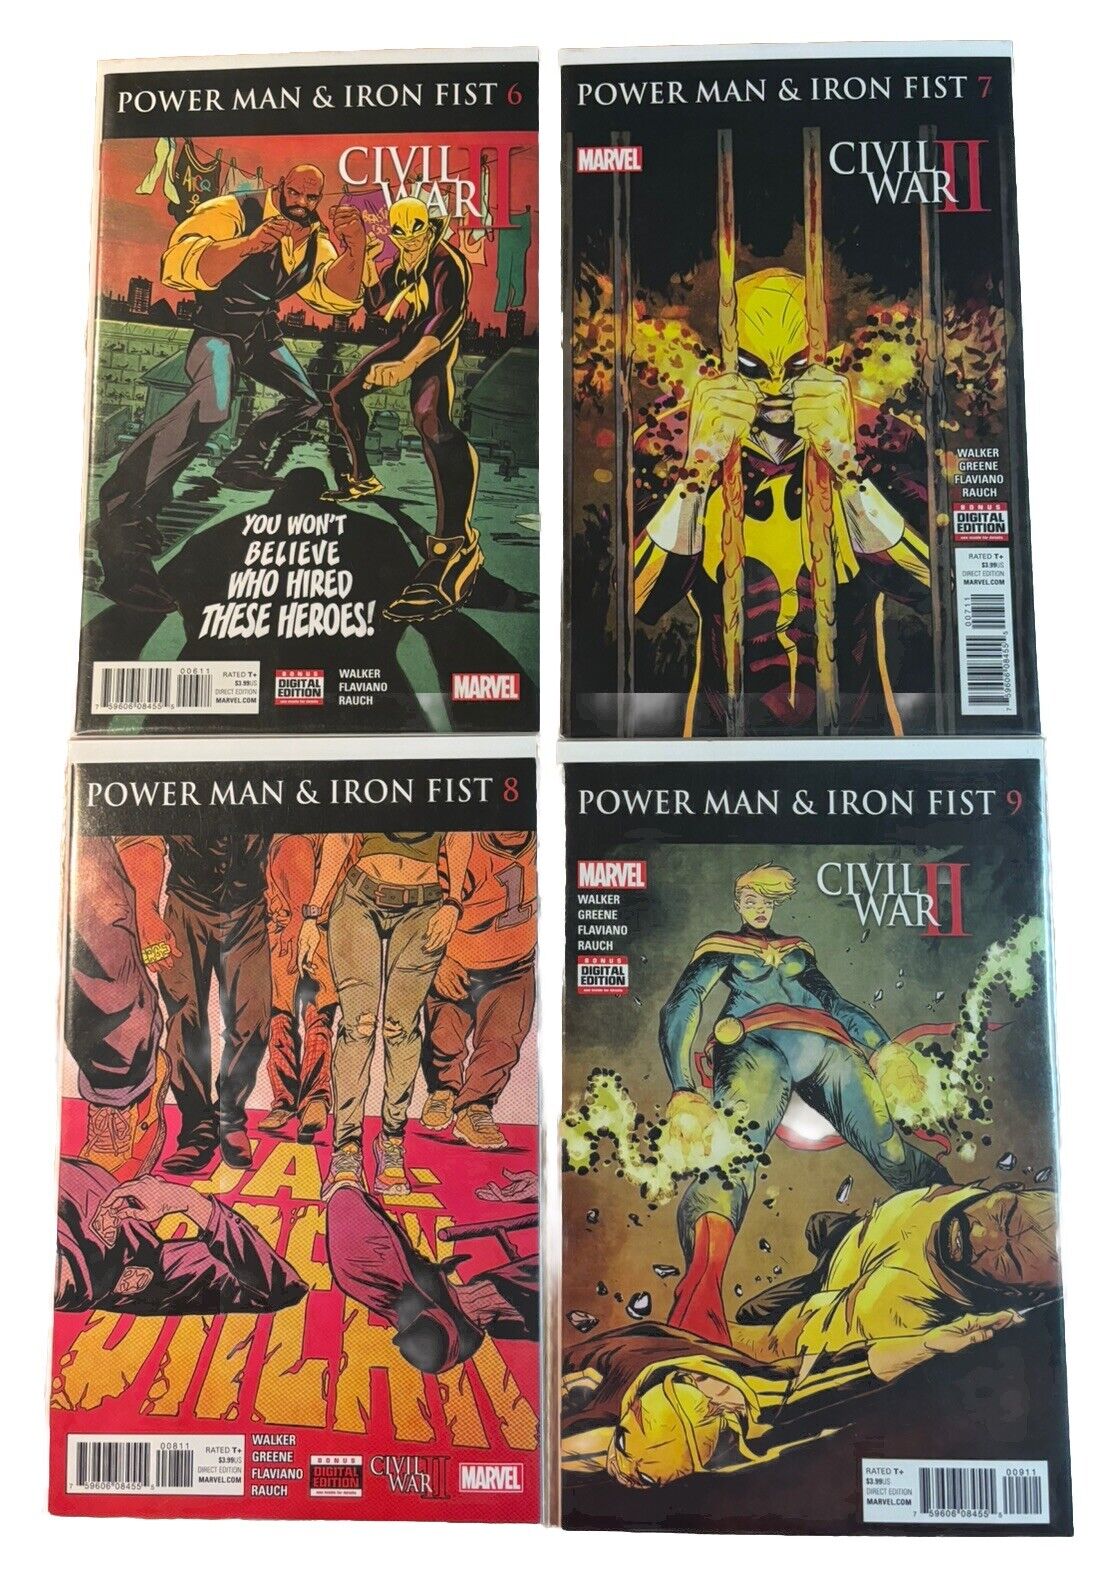 Power Man And Iron Fist #6-9 Marvel Civil War Tie-ins 2016